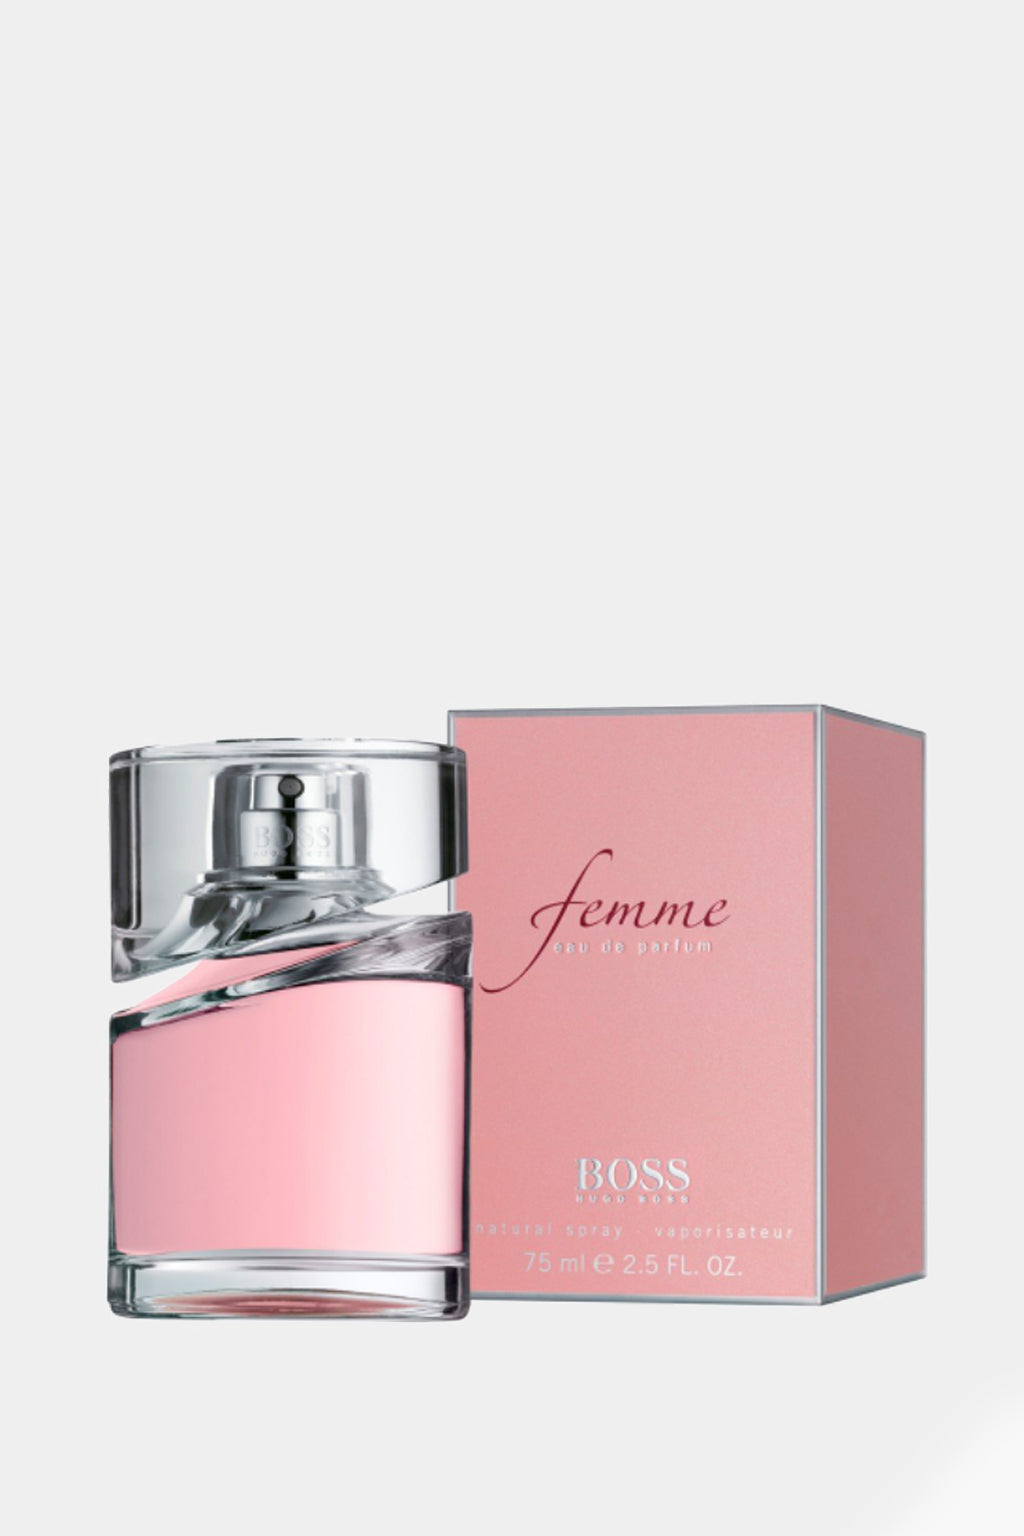 Hugo Boss - Femme Eau de Parfum